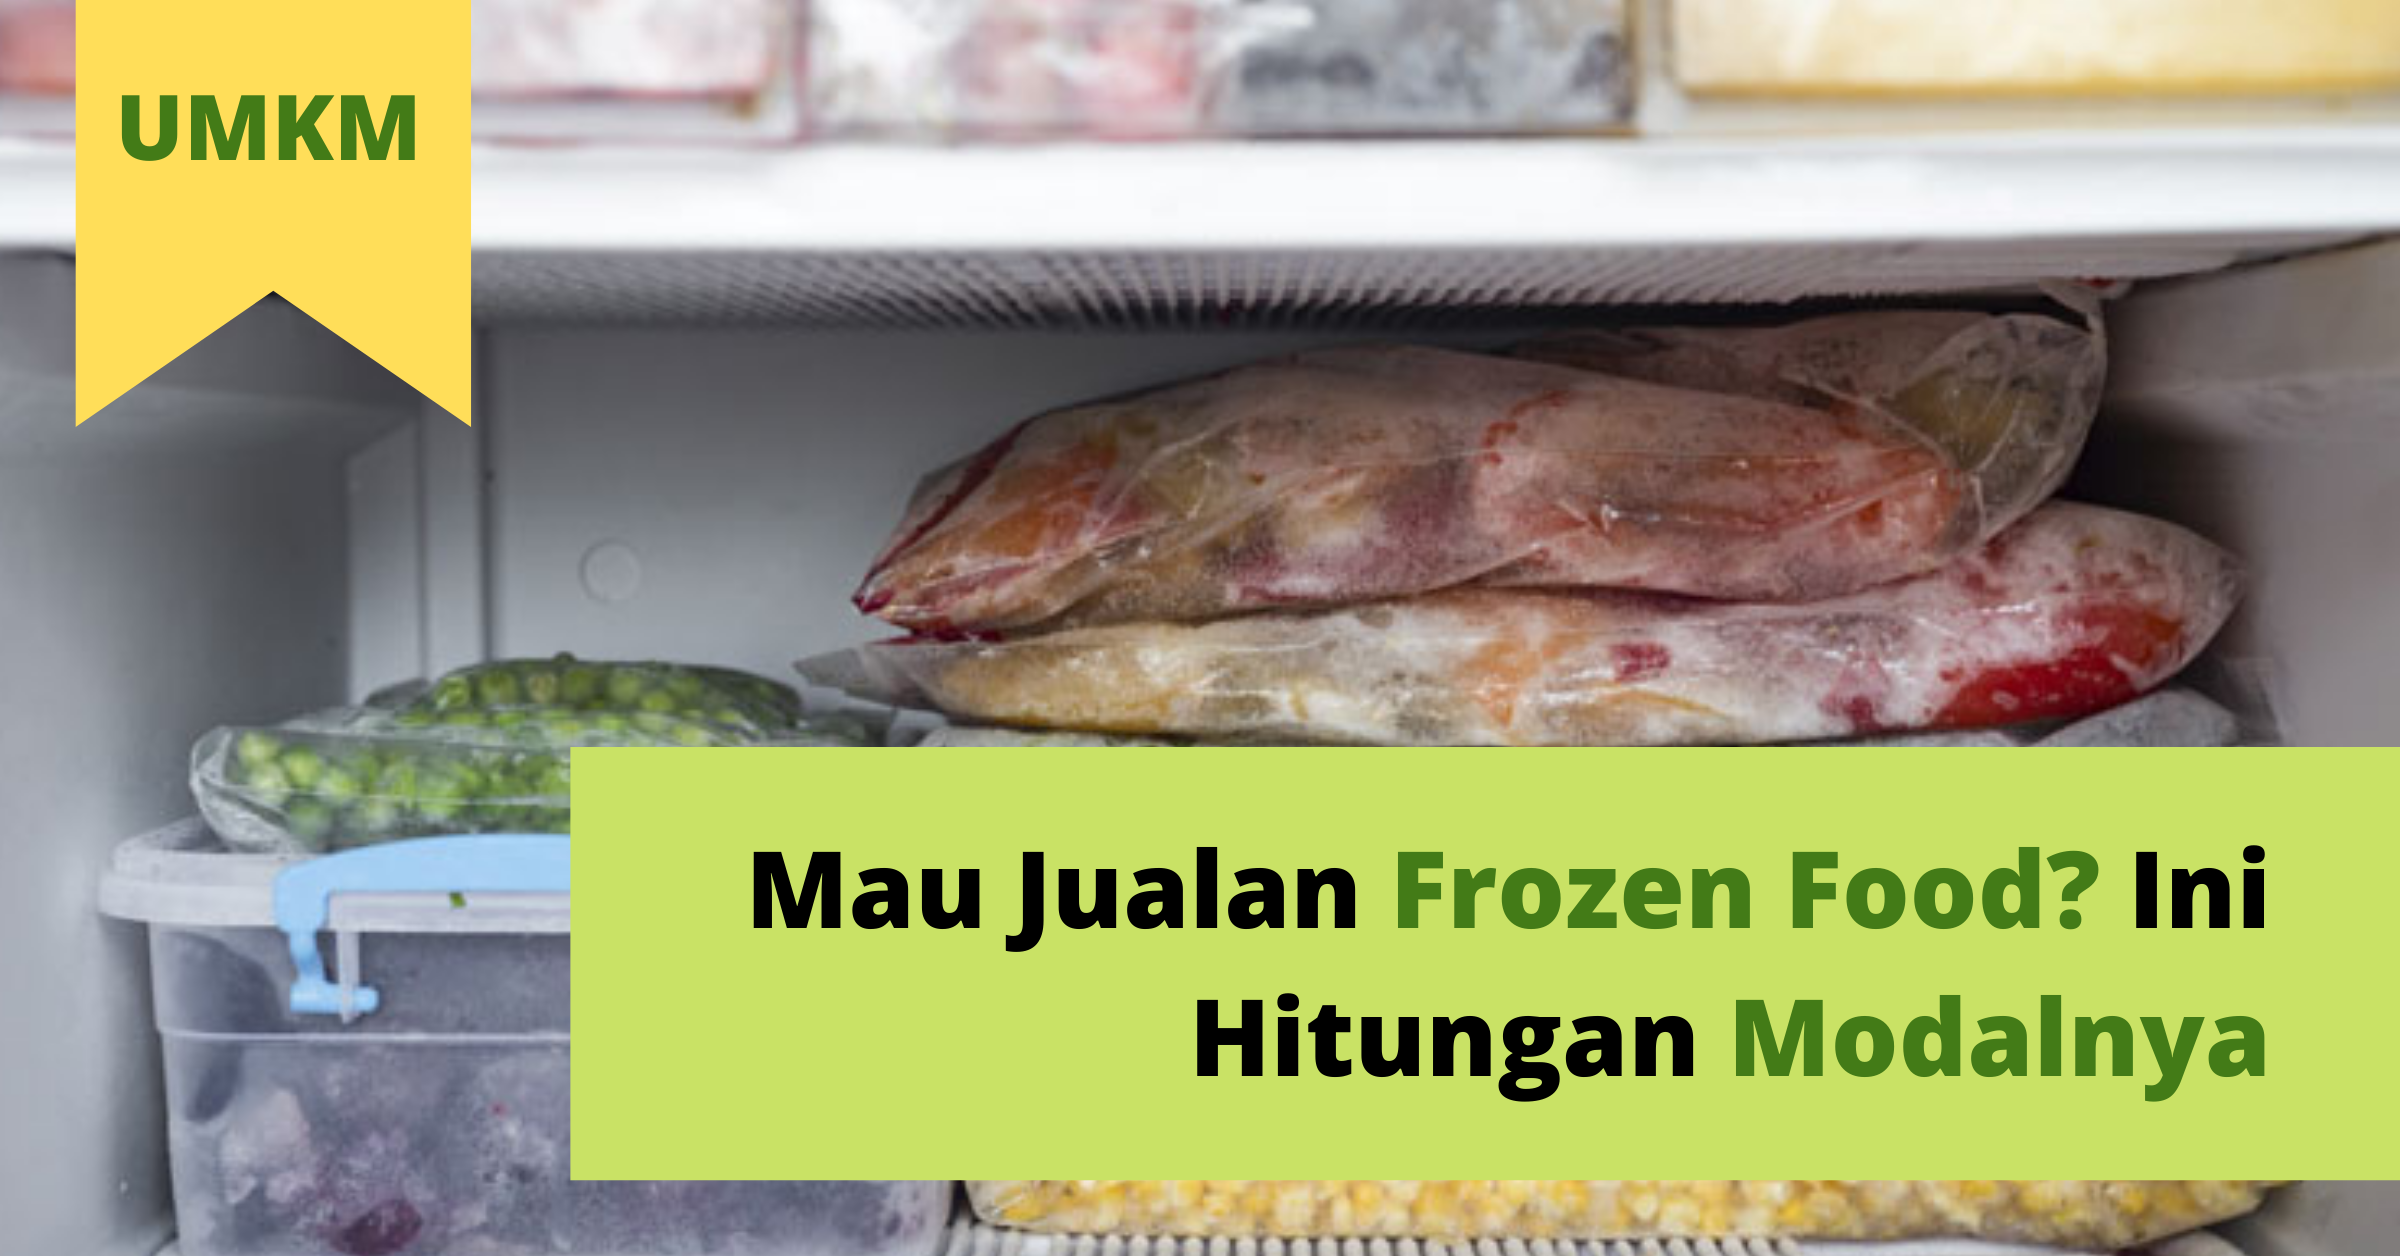 Berapa Modal Jualan Frozen Food